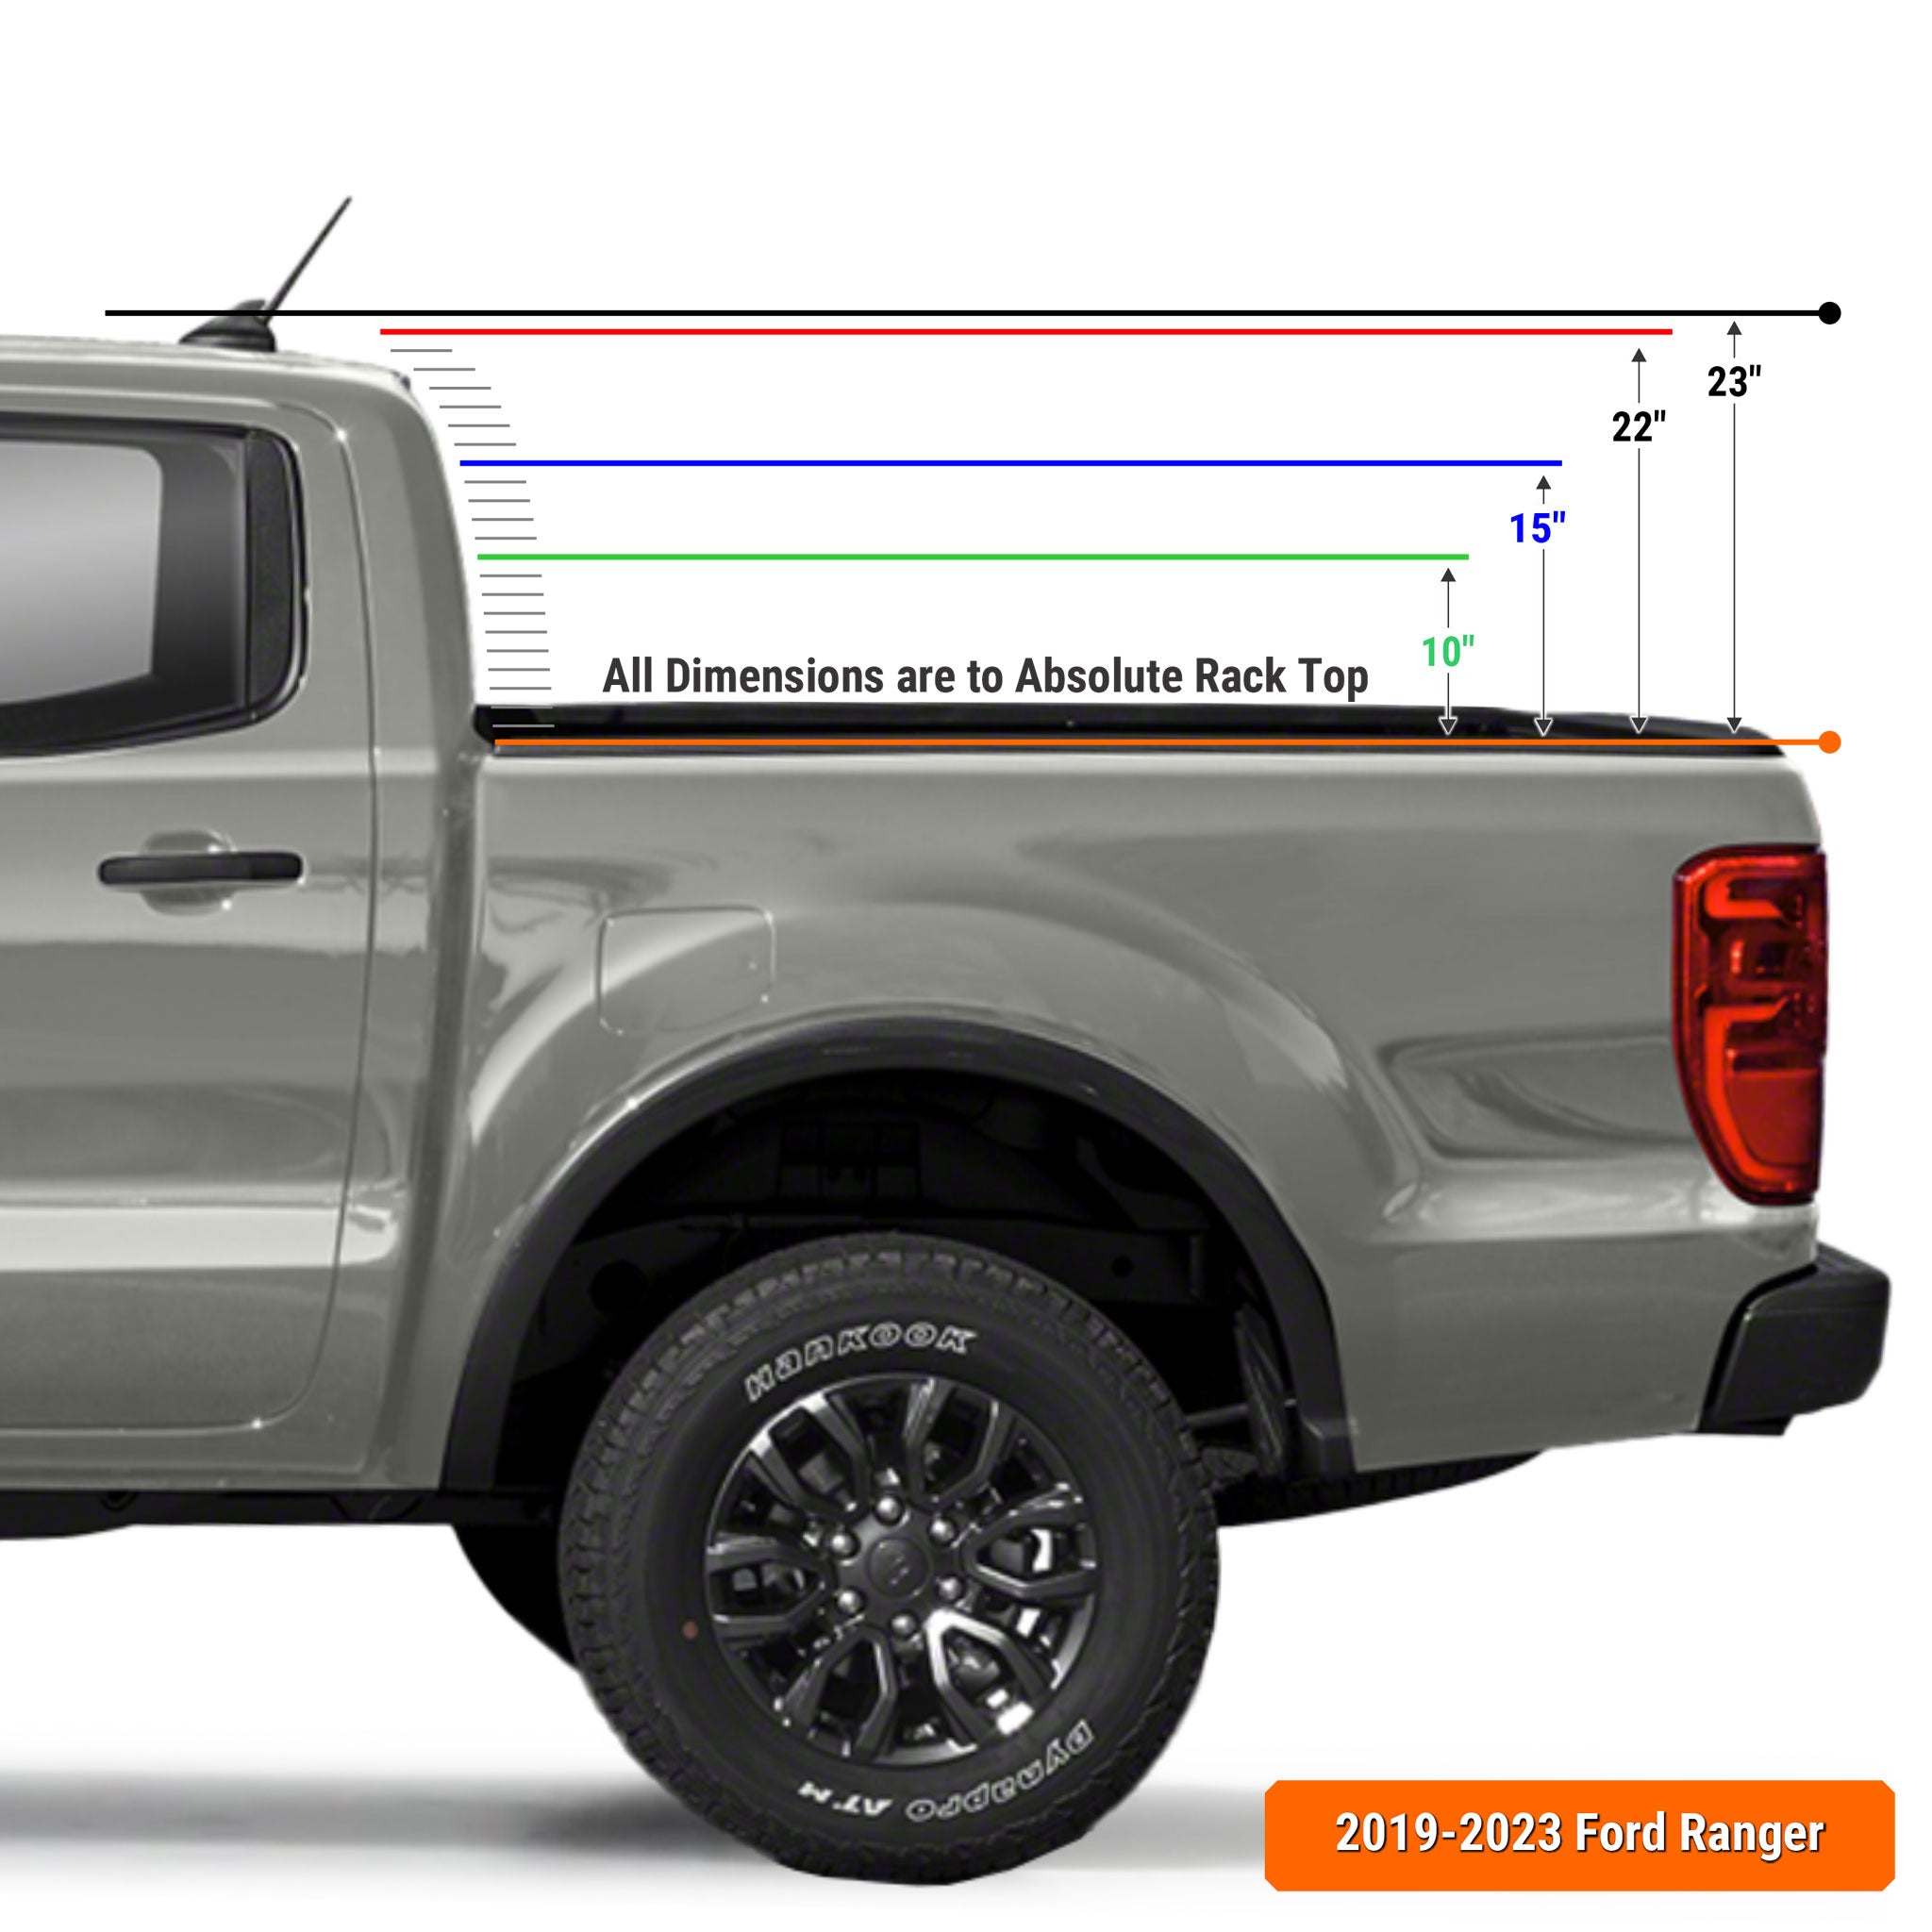 2019-2023 Ford Ranger Bed Rack Height Chart